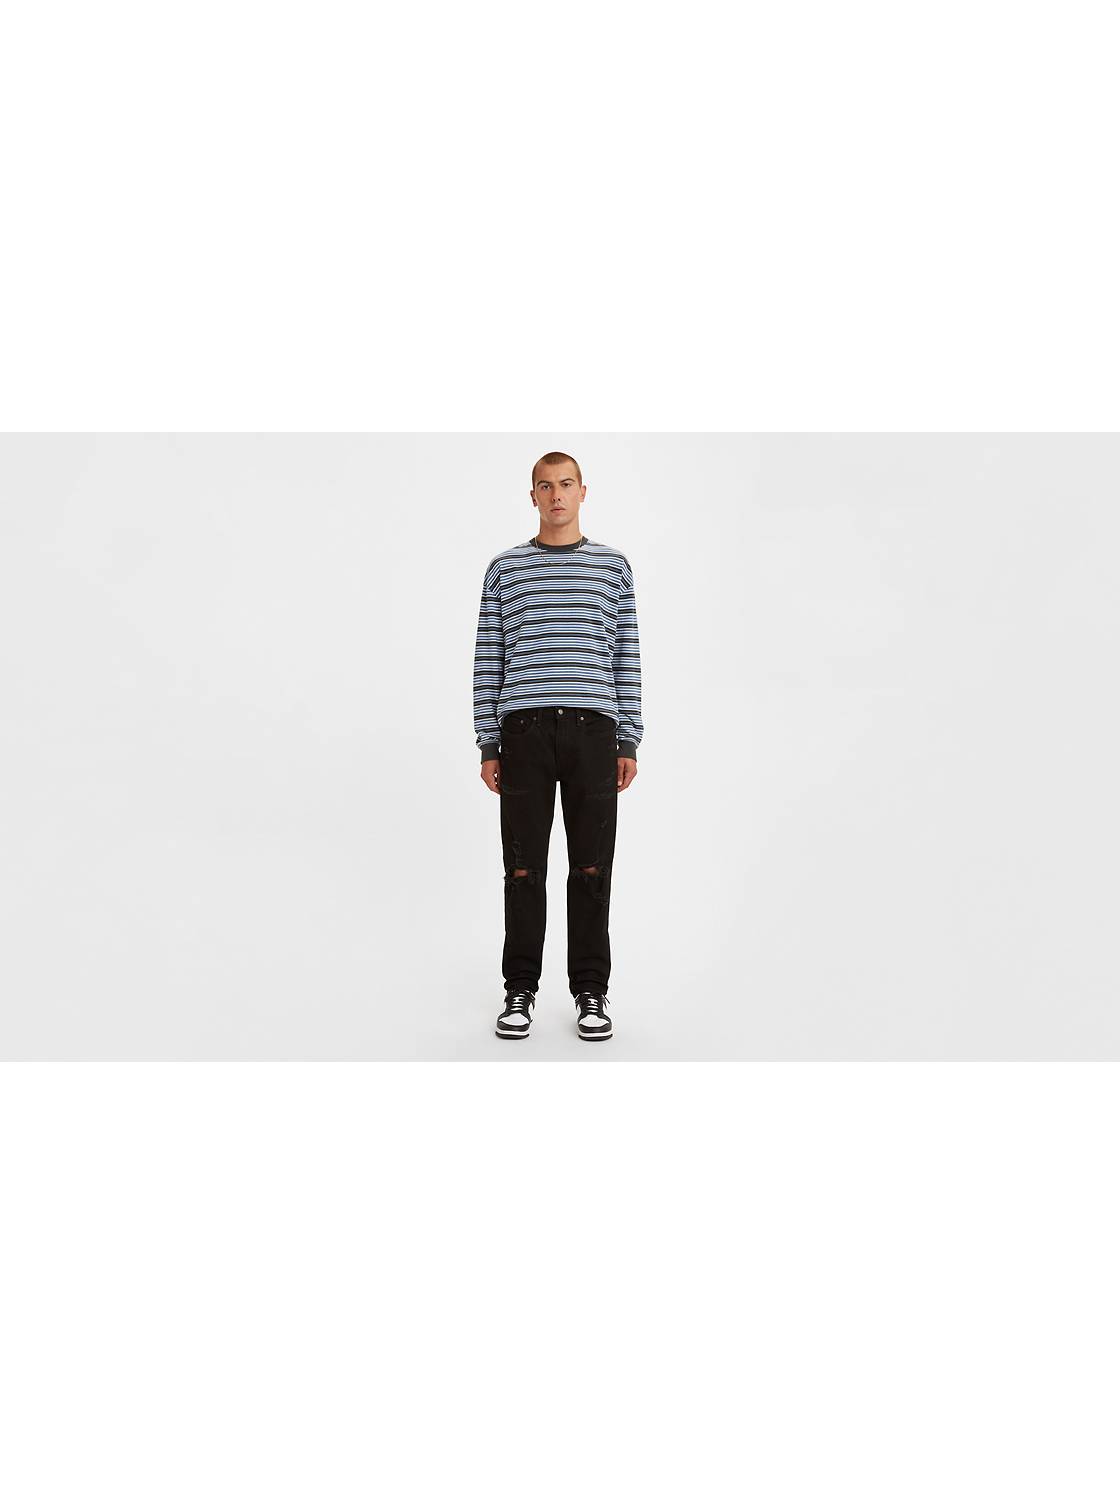 Goodfellow & Co Grey Slim Total Flex Jeans Men's Size 34 x 32 NEW